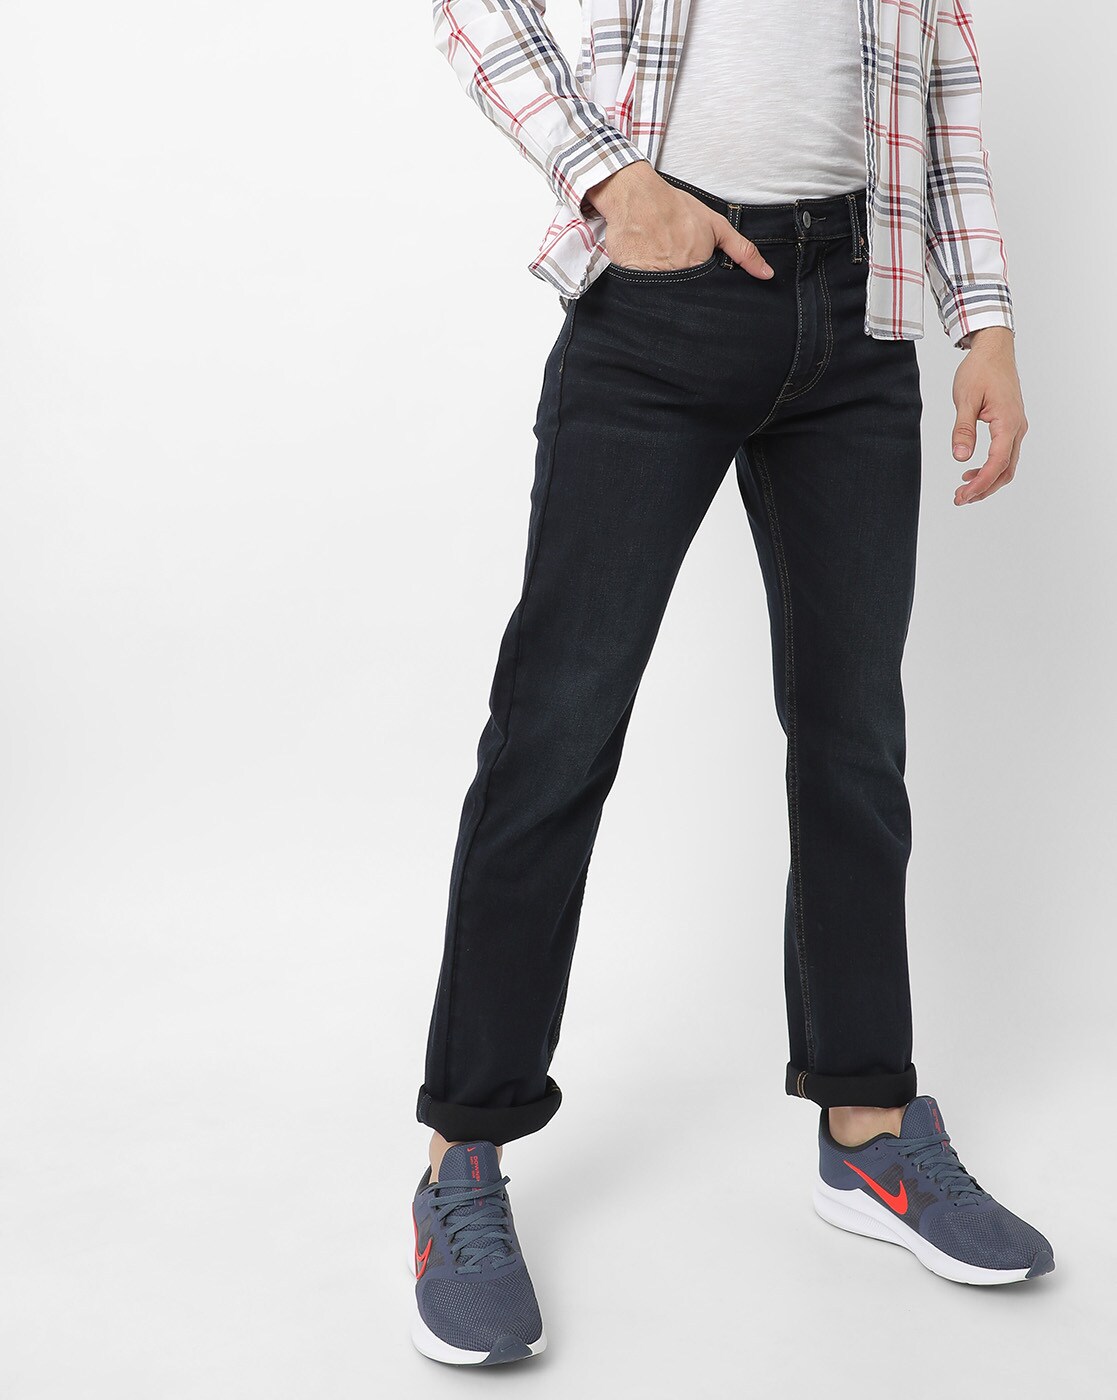 Buy Dark Blue Jeans for Men by LEVIS Online